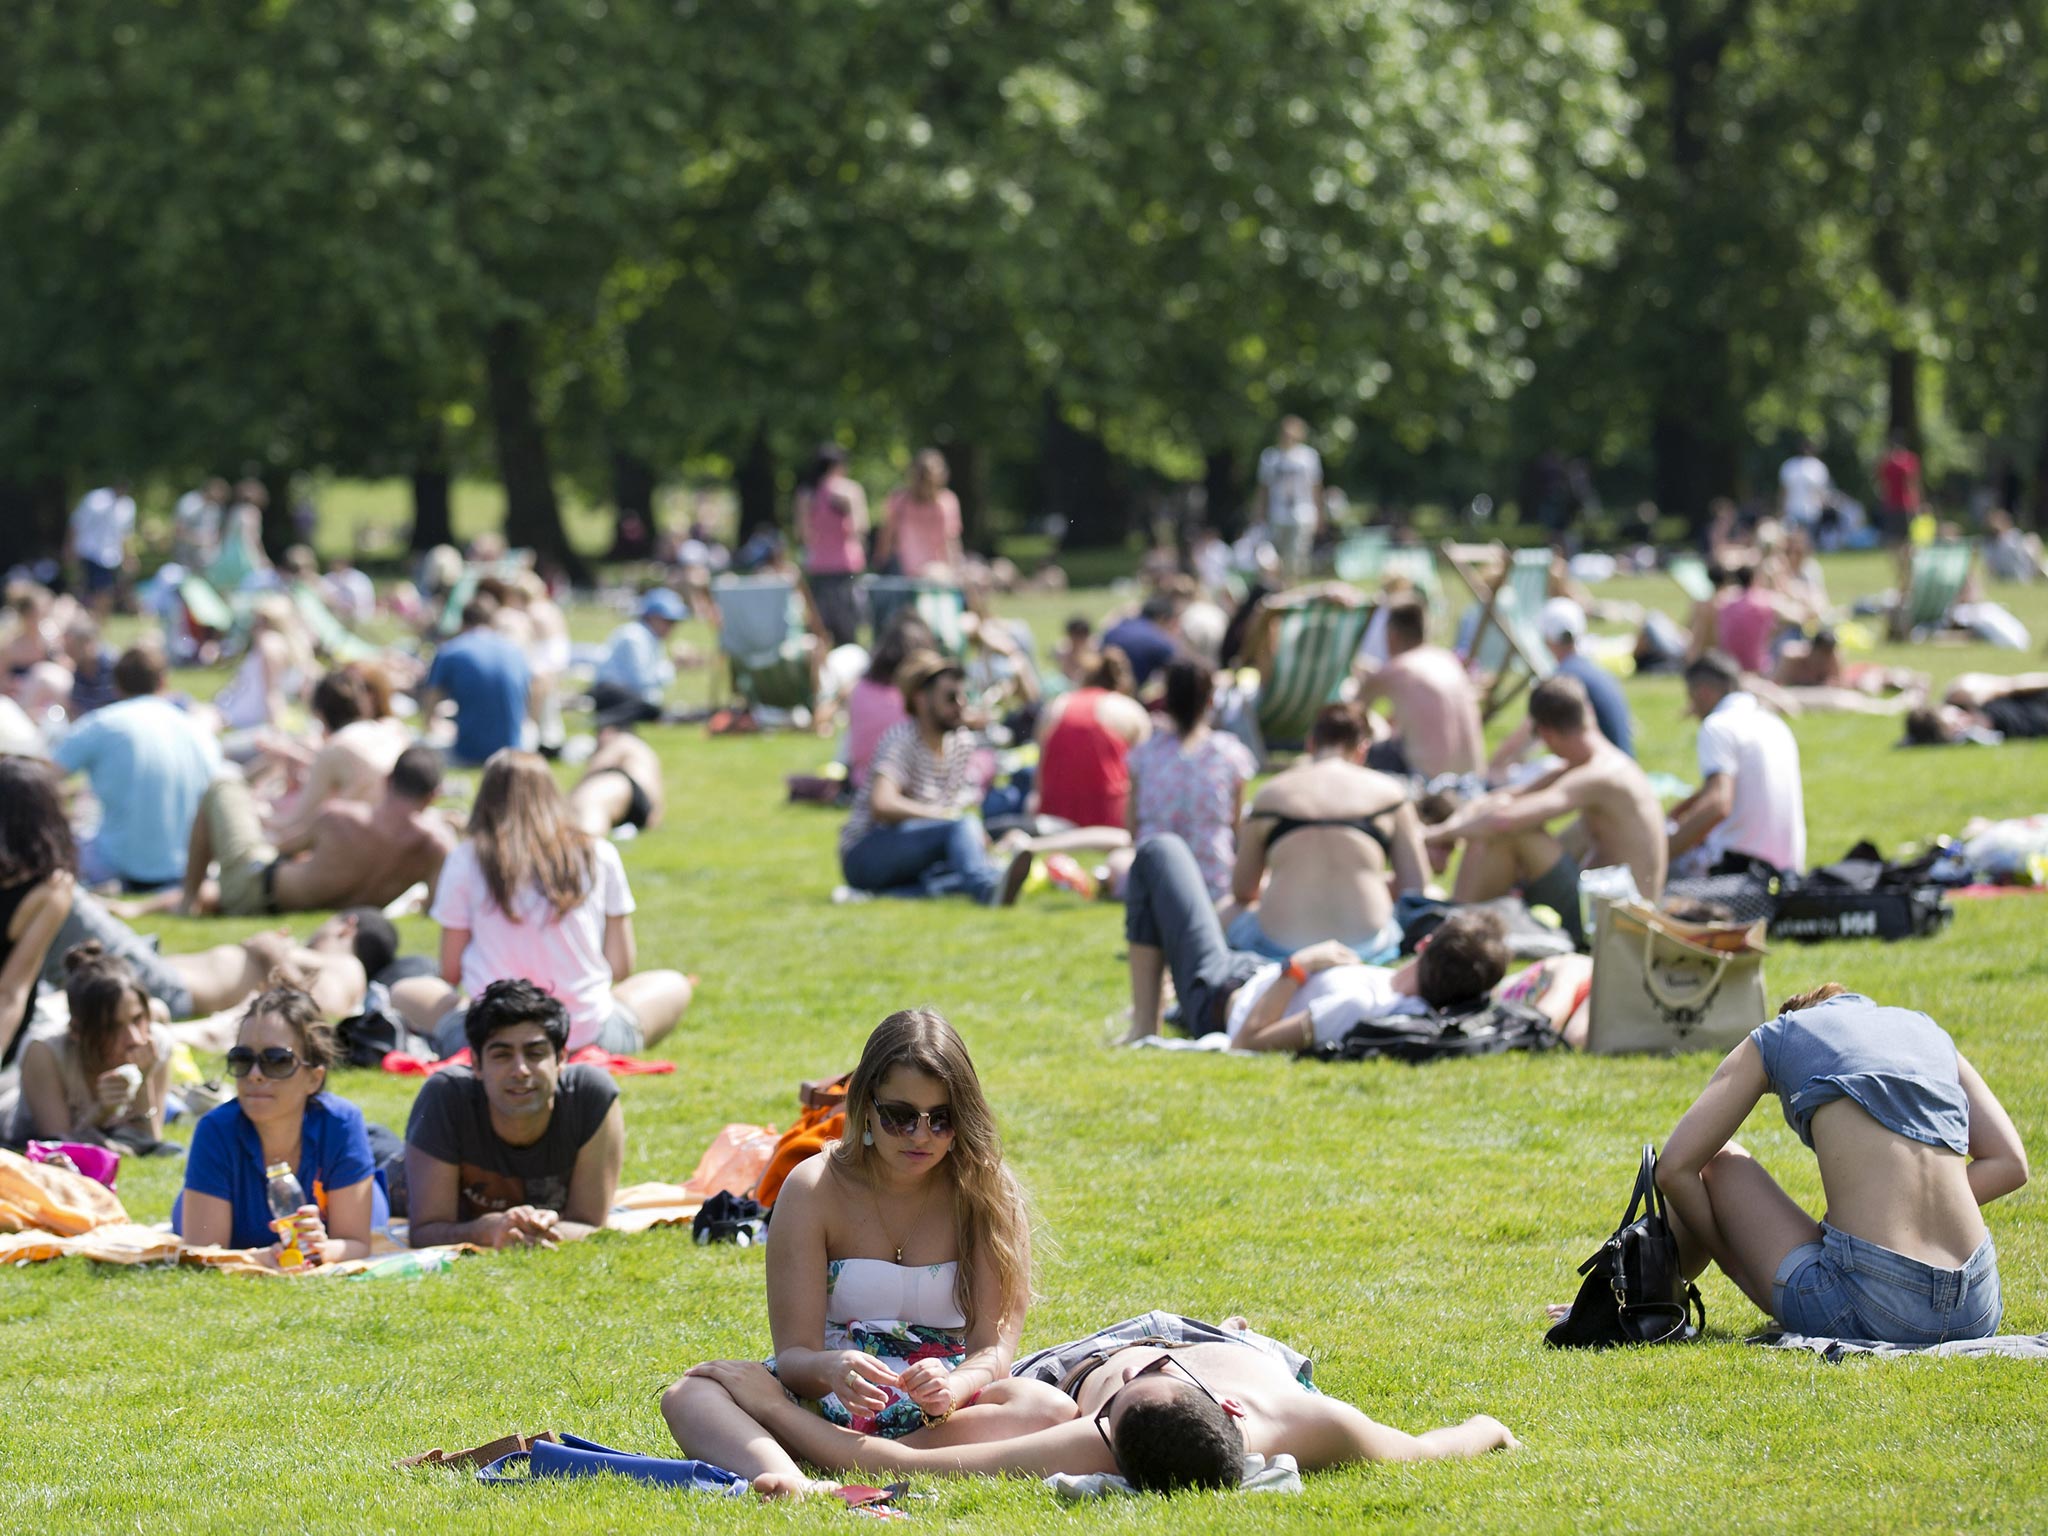 People sunbathe in the summer heat in a park in central London